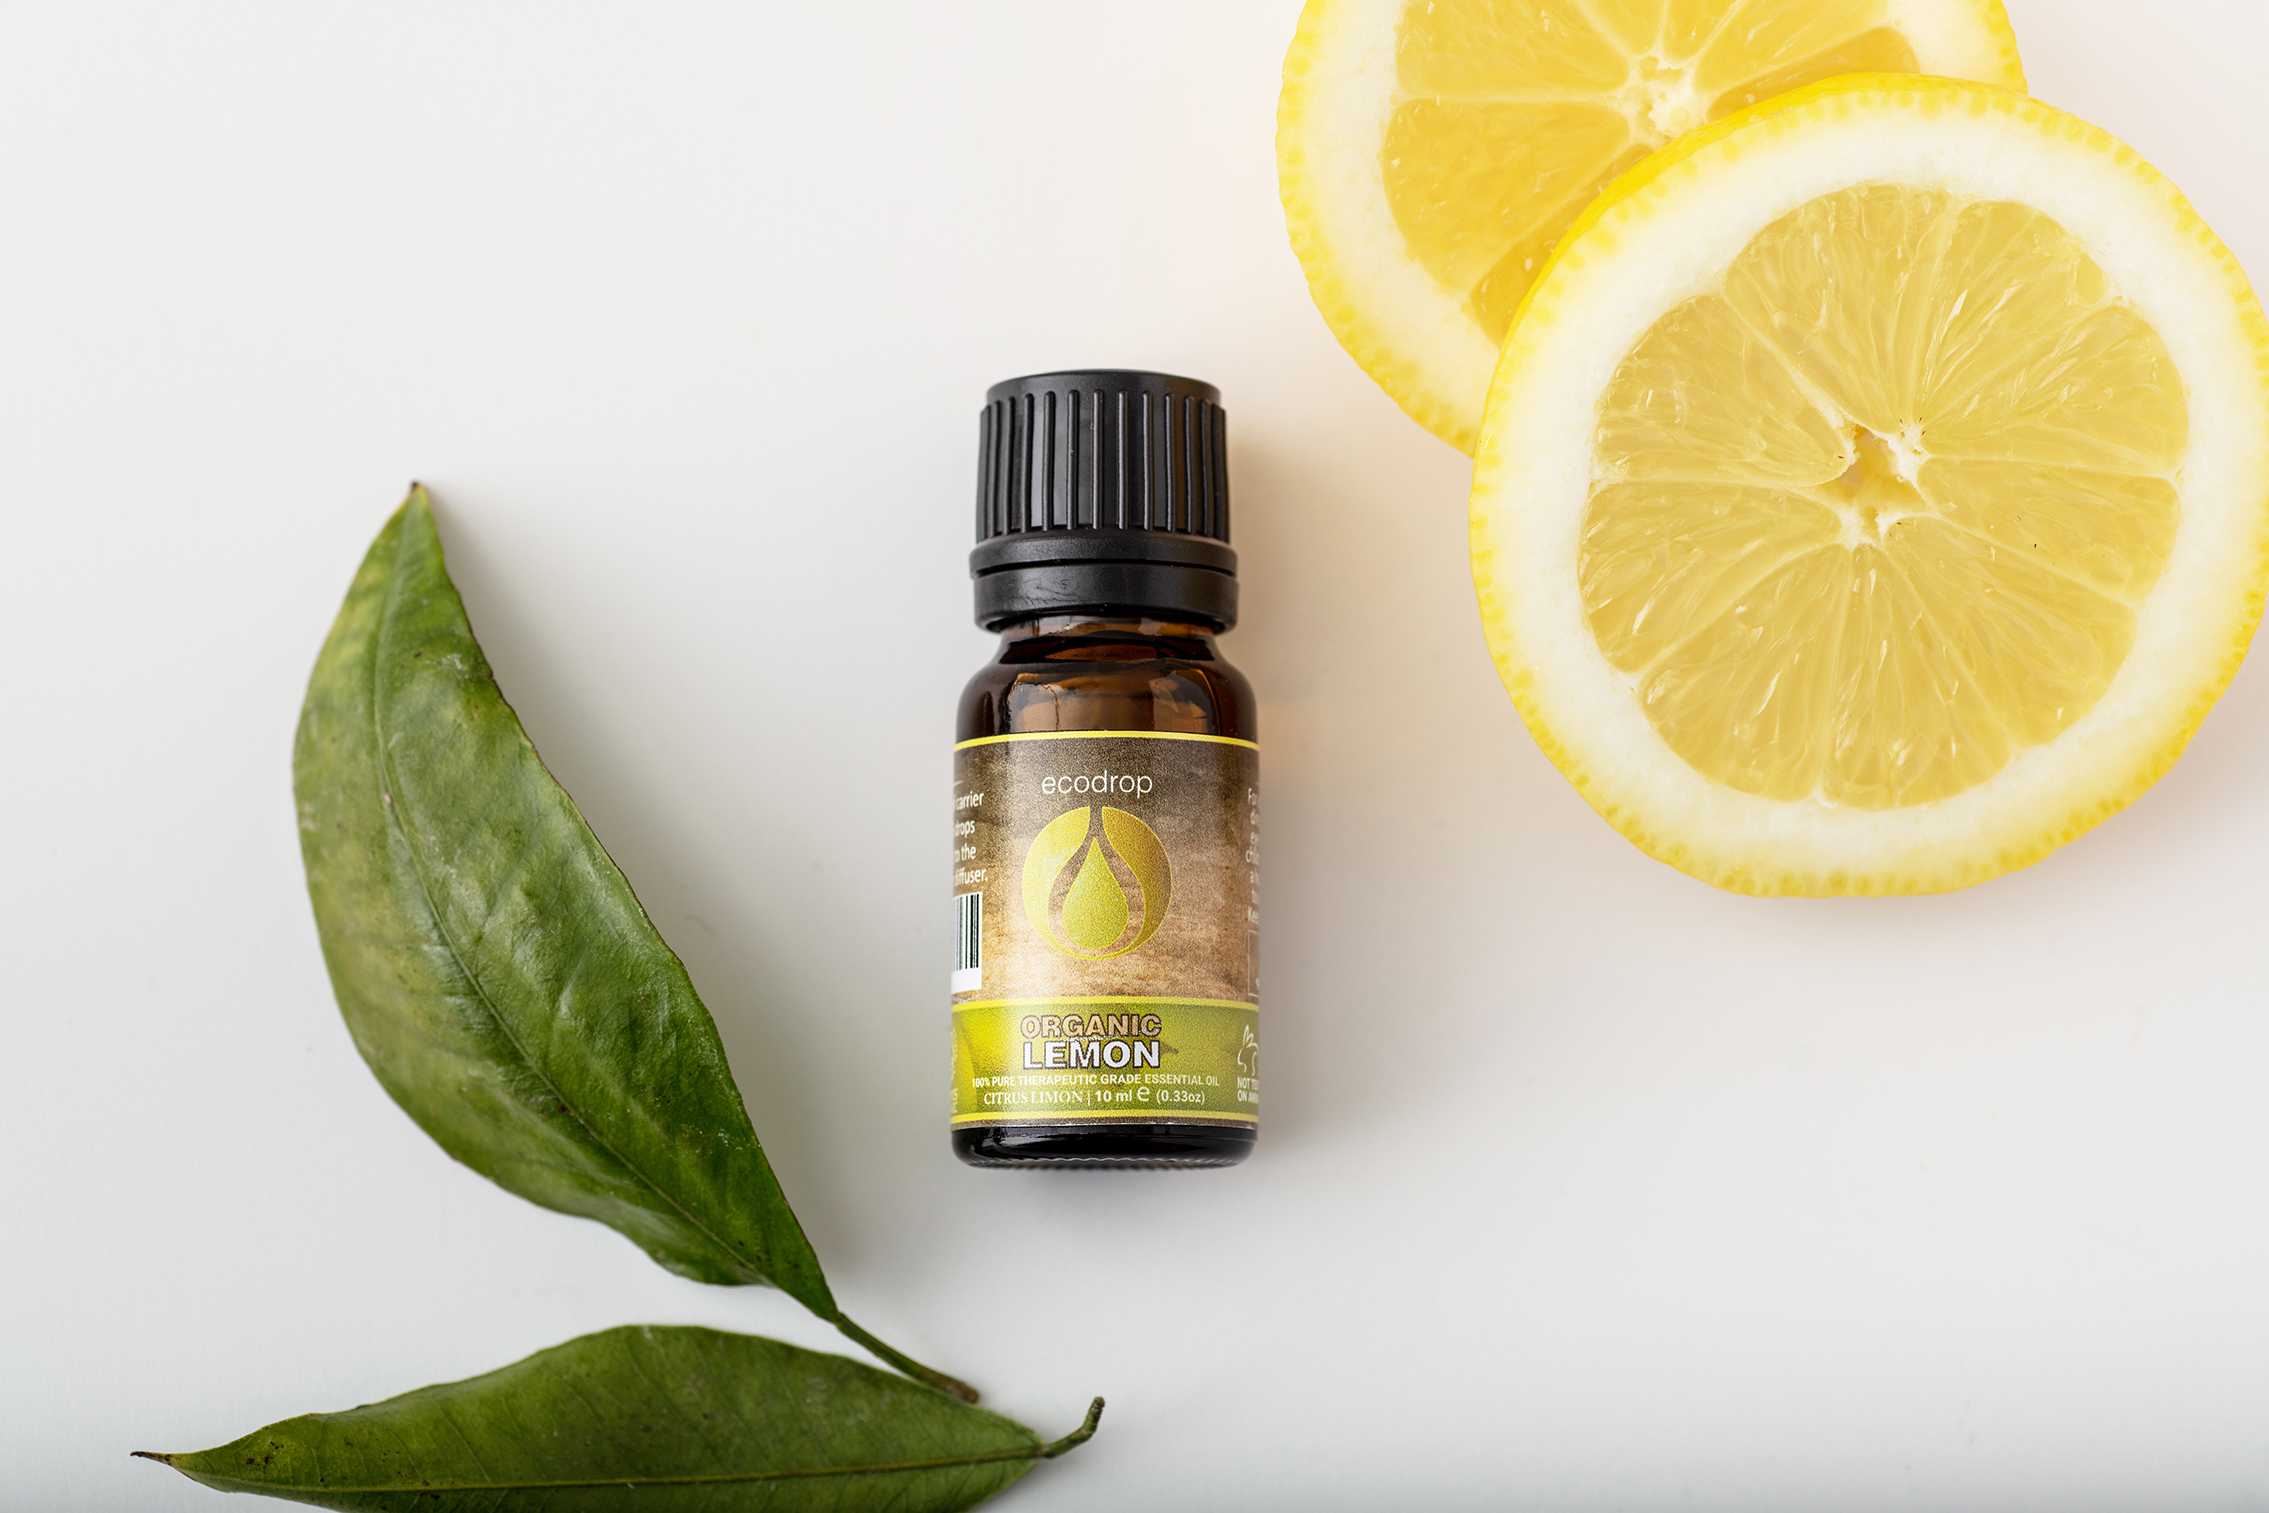 Do citrus essential oils uplift your mood? 